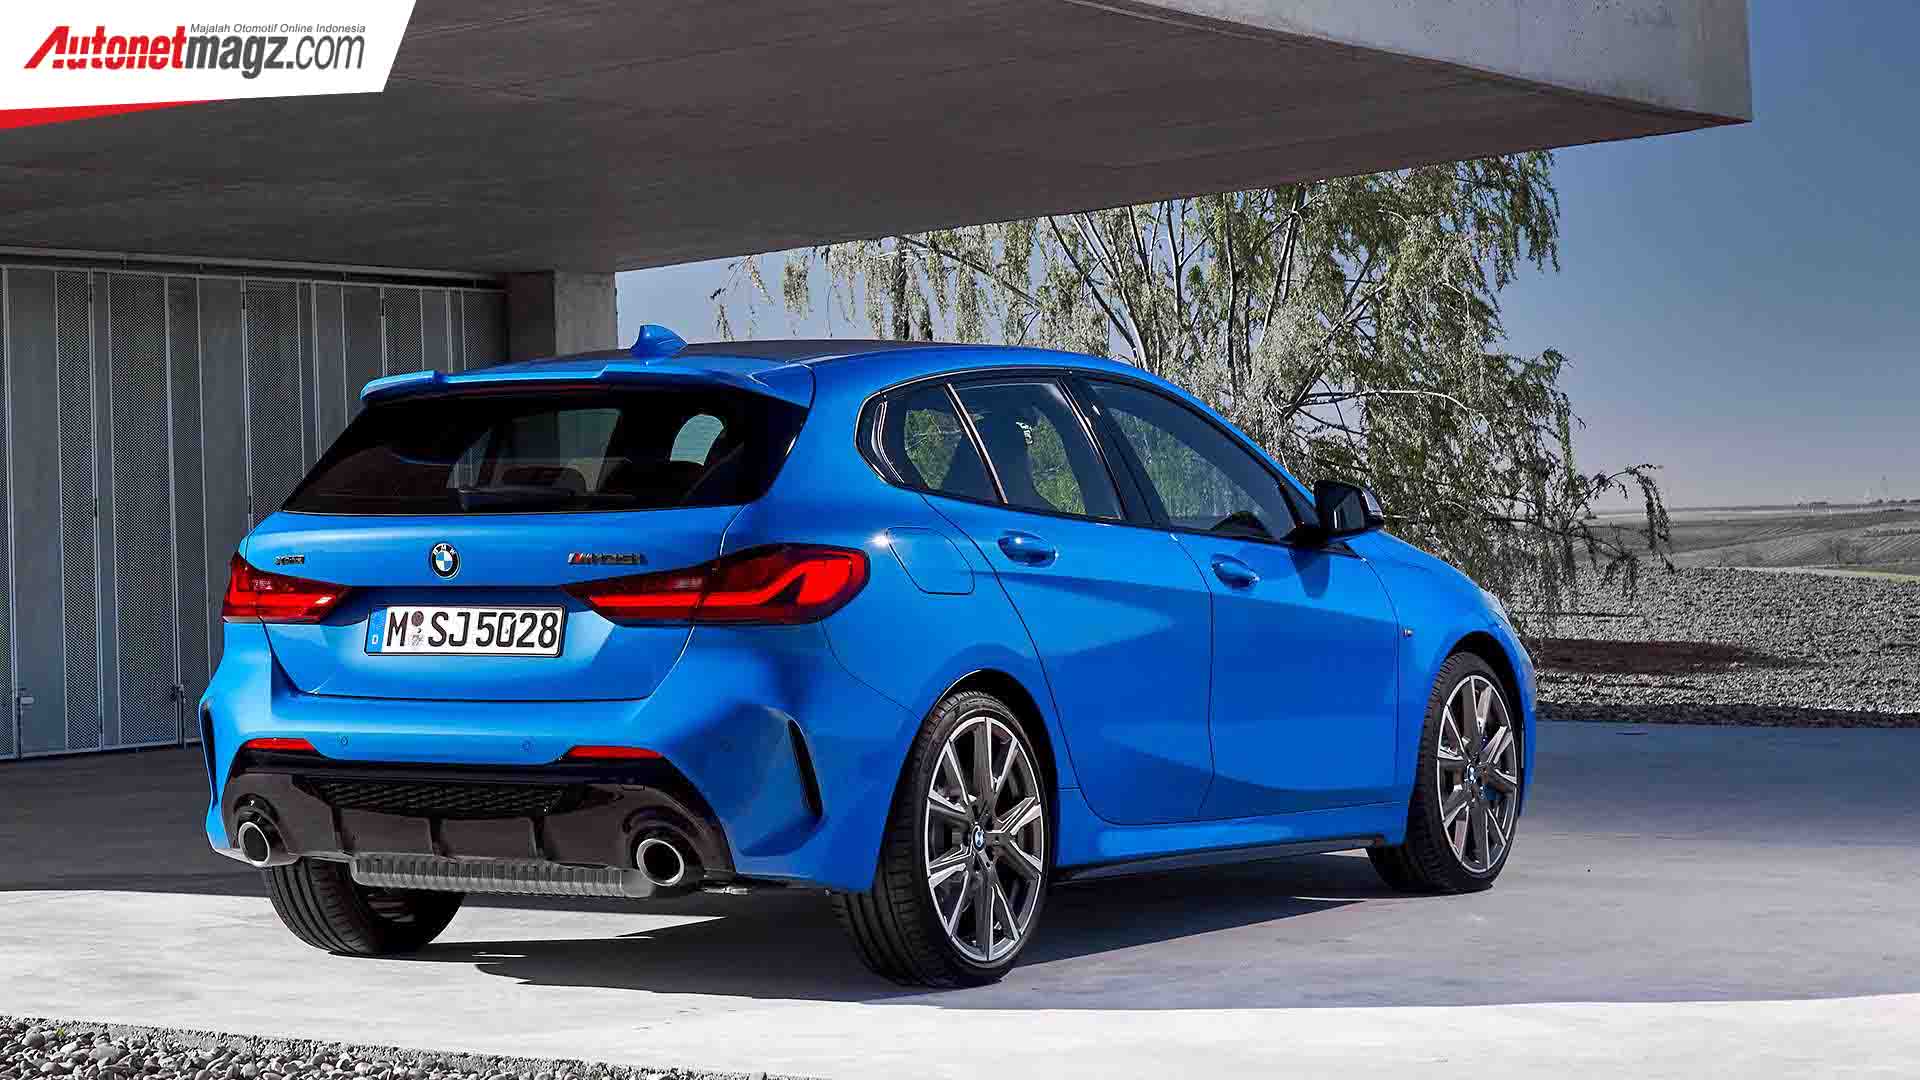 Berita, BMW M135i xDrive belakang: BMW 1-Series 2020 Diperkenalkan, Versi Hatchback BMW X2?